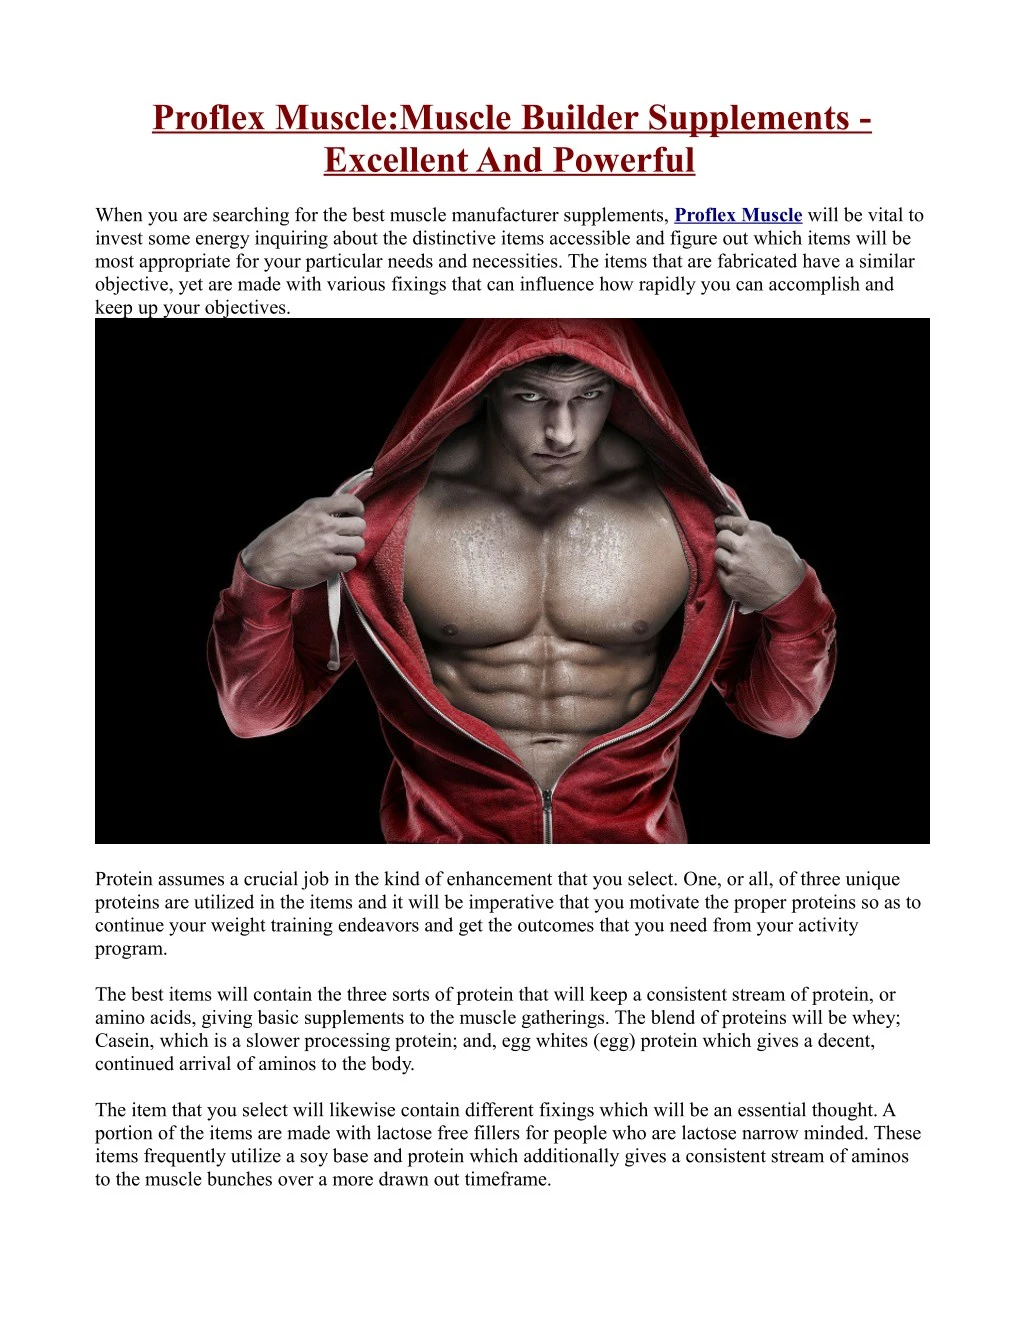 proflex muscle muscle builder supplements